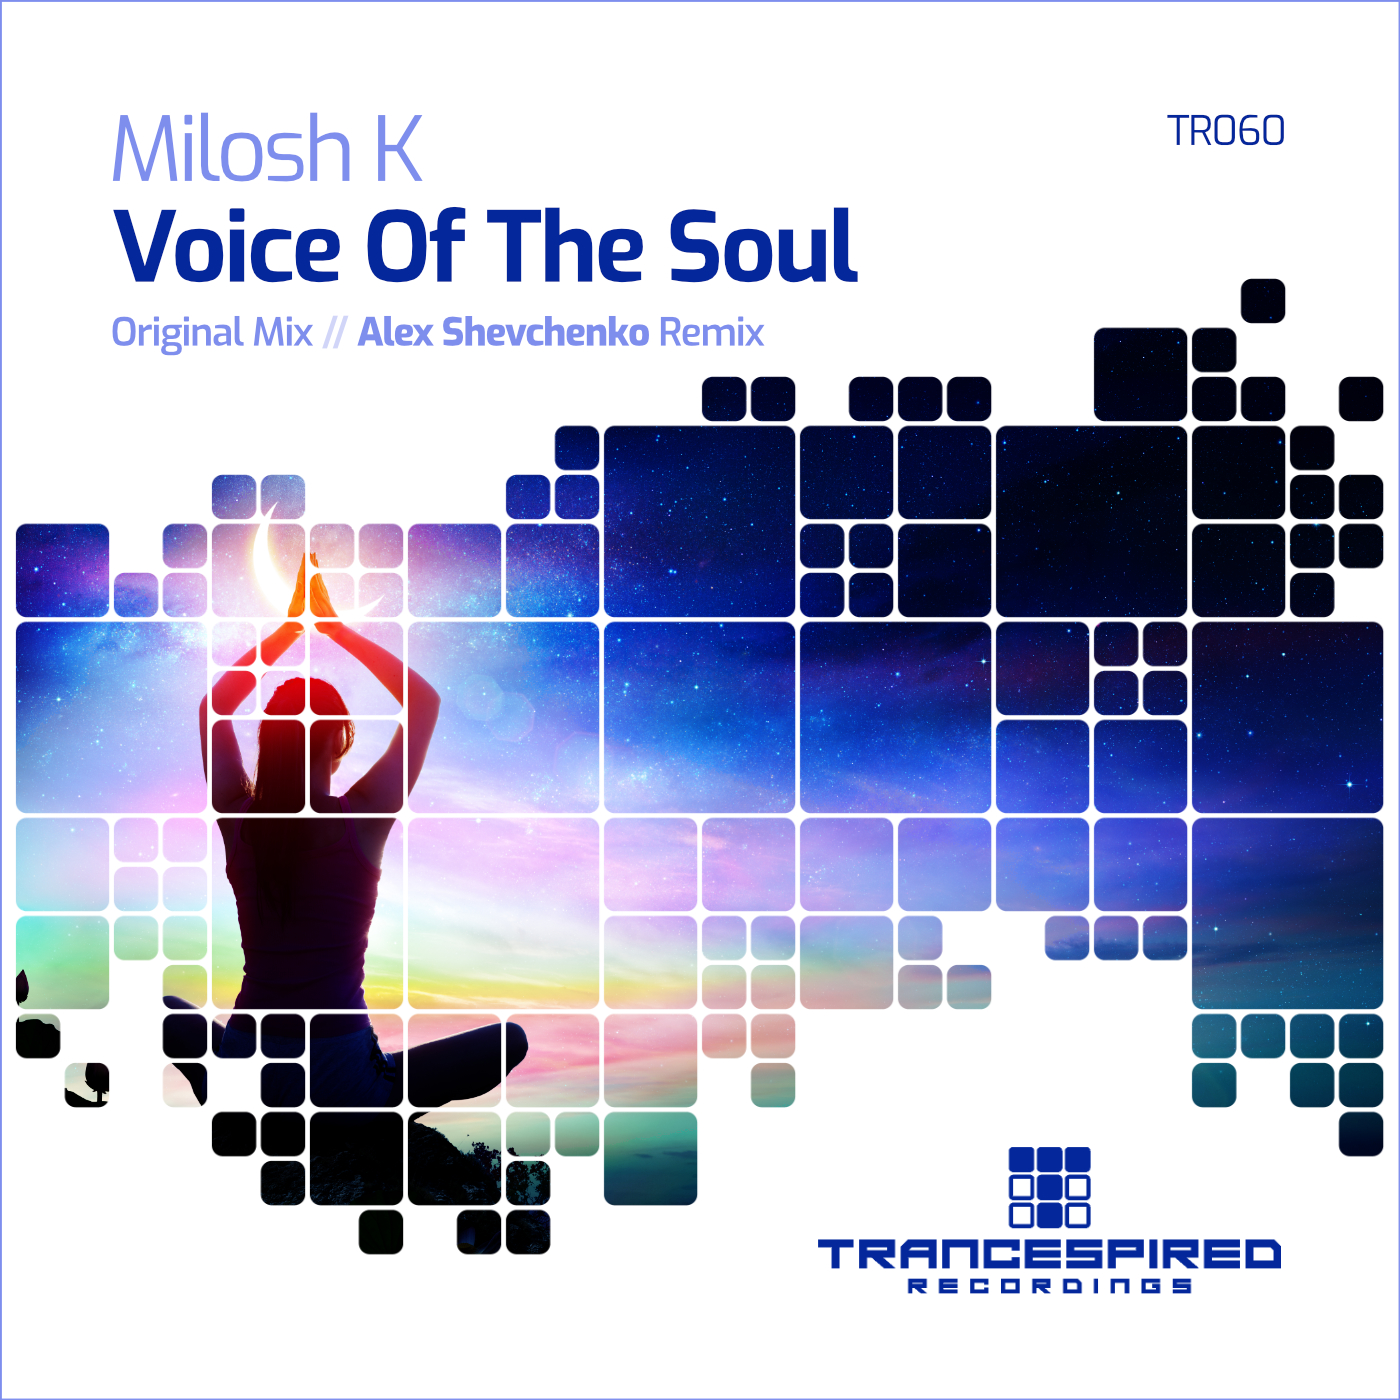 Milosh K presents Voice Of The Soul on Trancespired Recordings